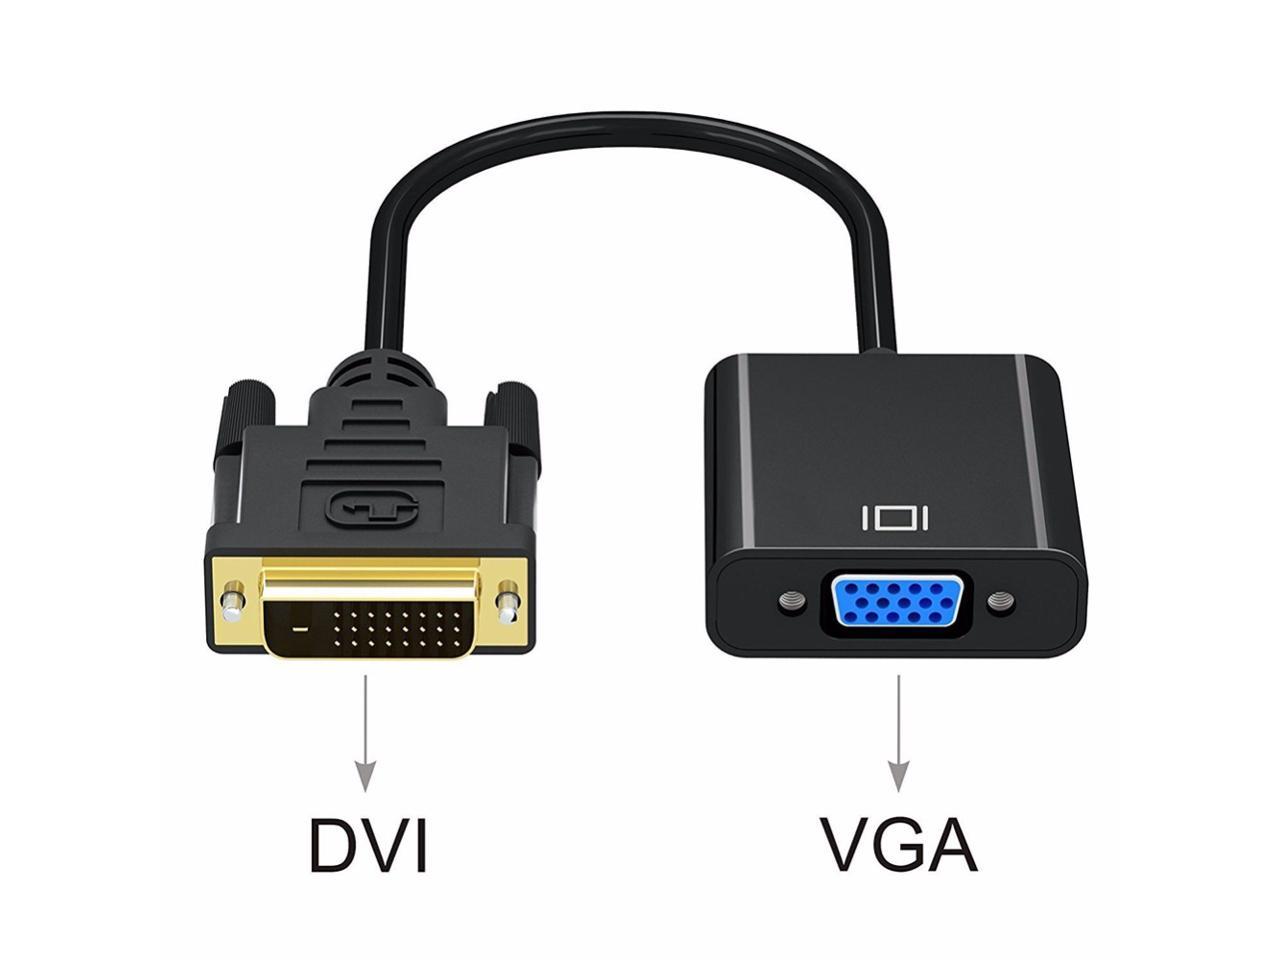 connector converter ELECTRÓNICA REY DVI-D 24+1 Adapter male to VGA 15 pin female